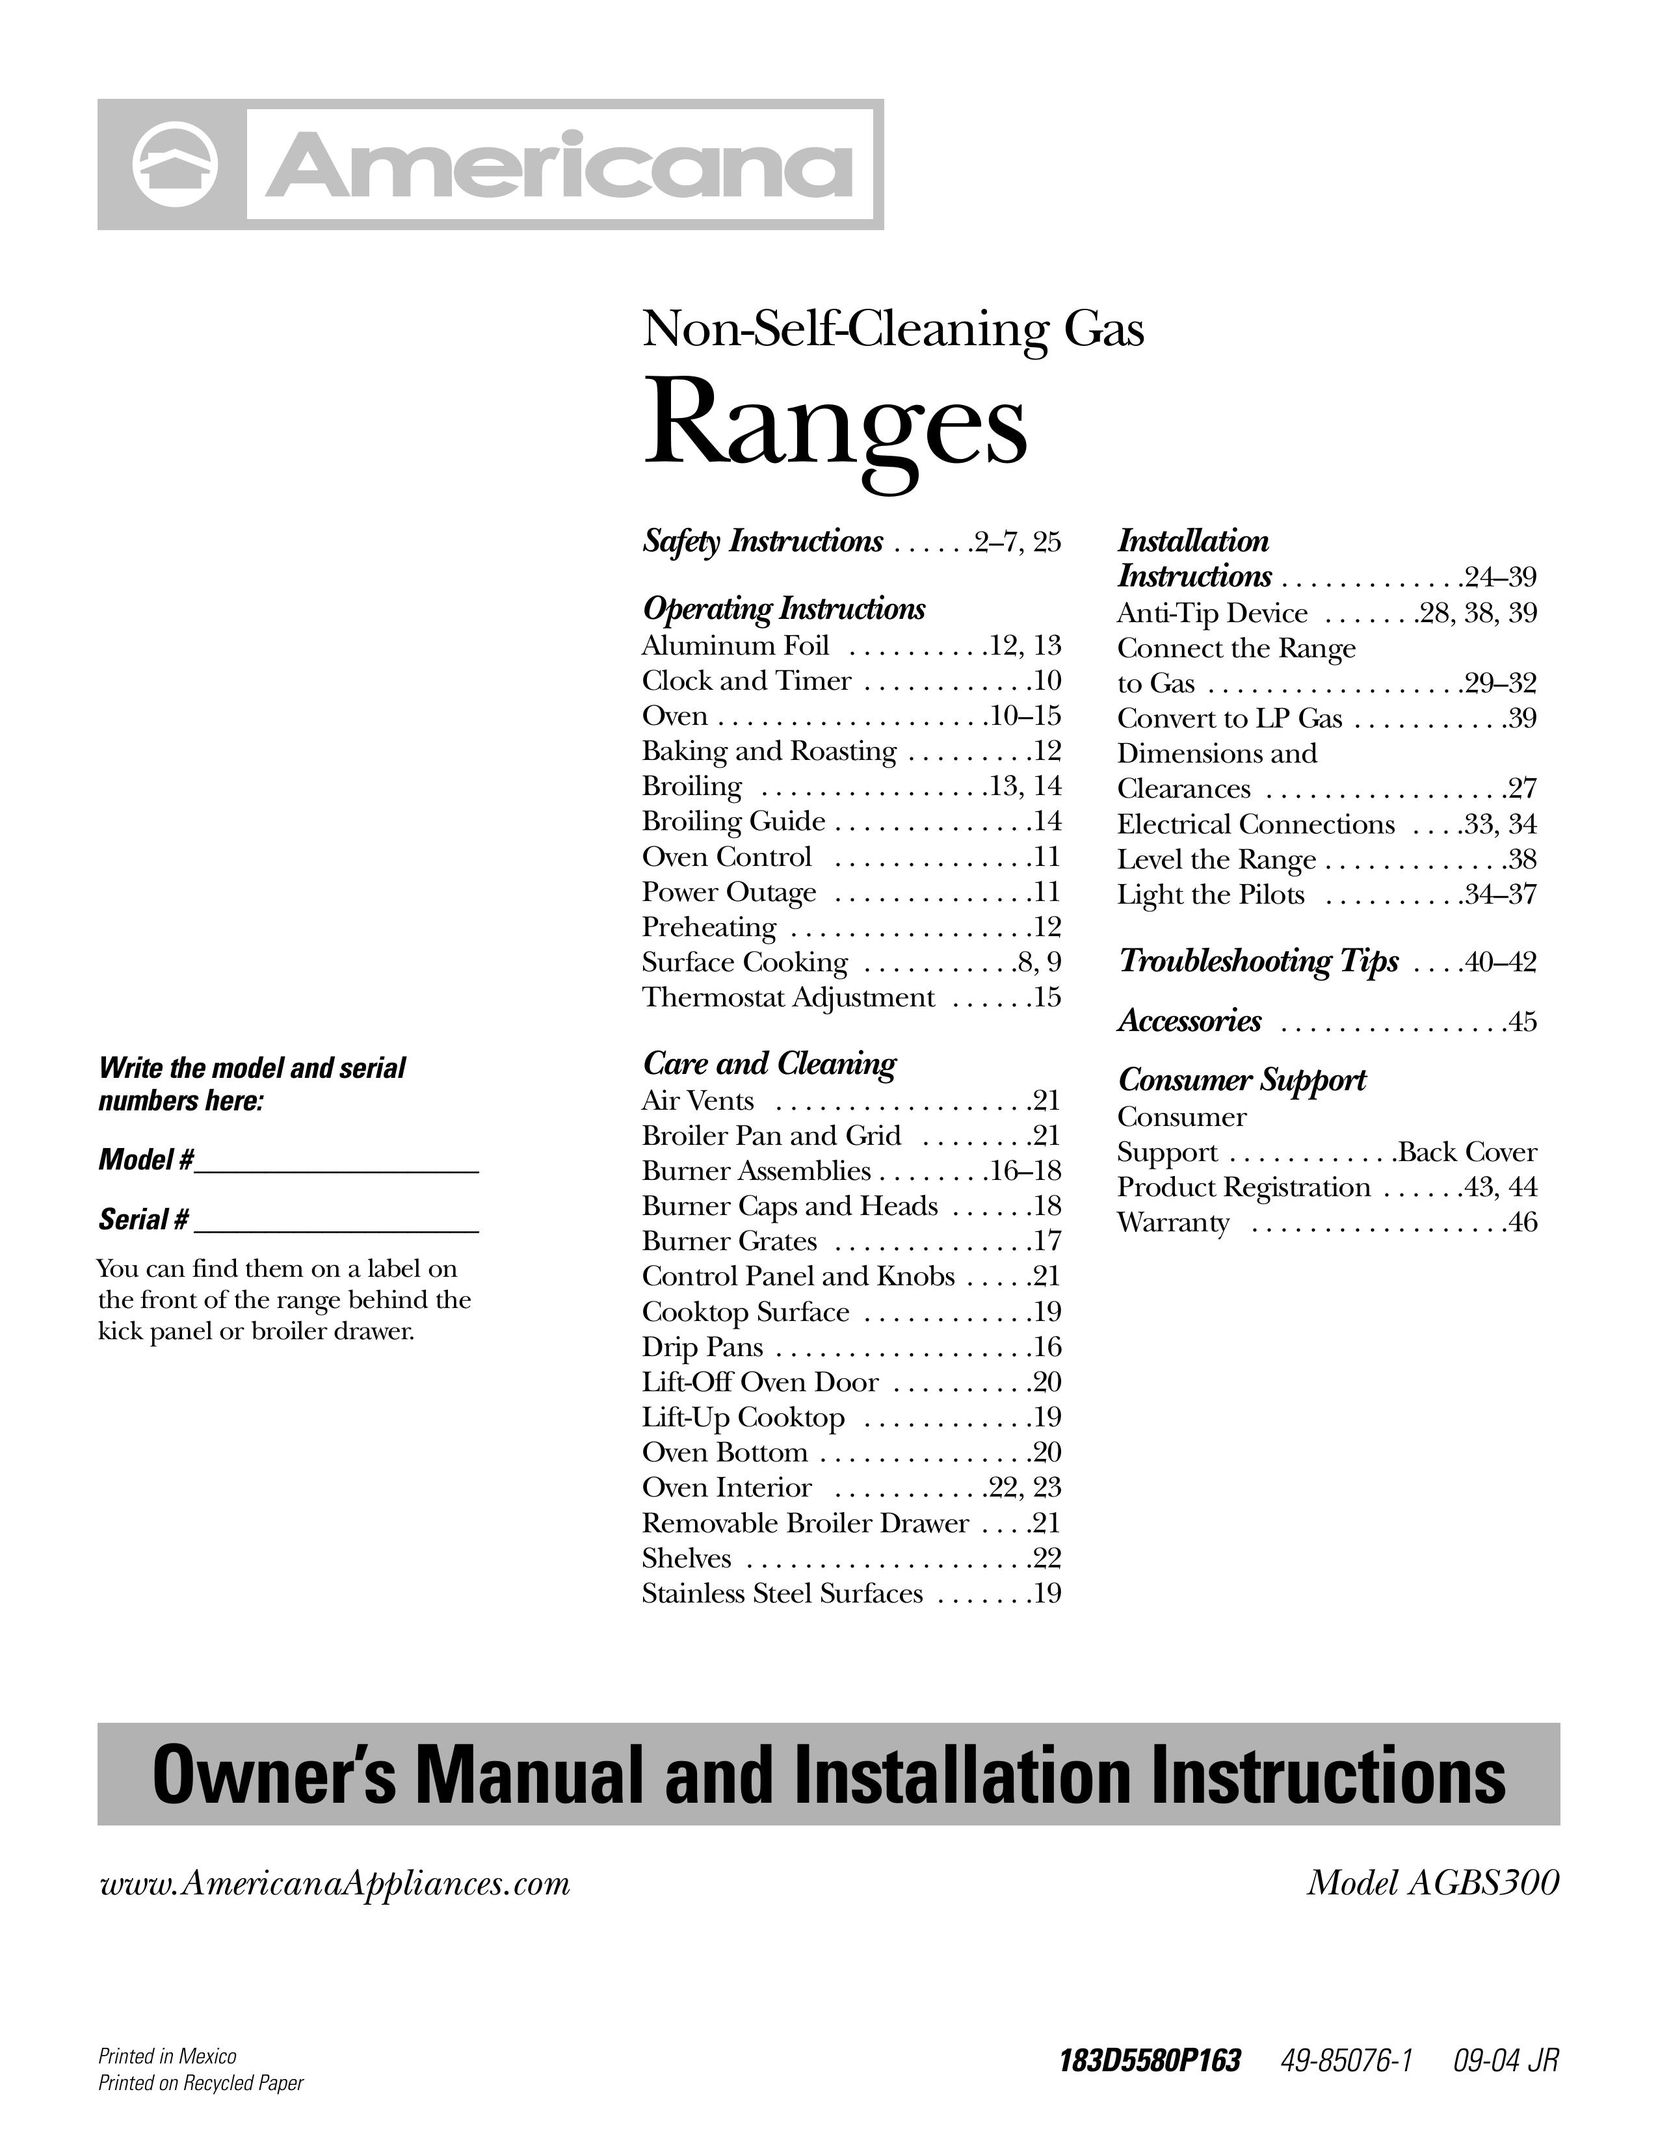 Americana Appliances AGBS300 Range User Manual